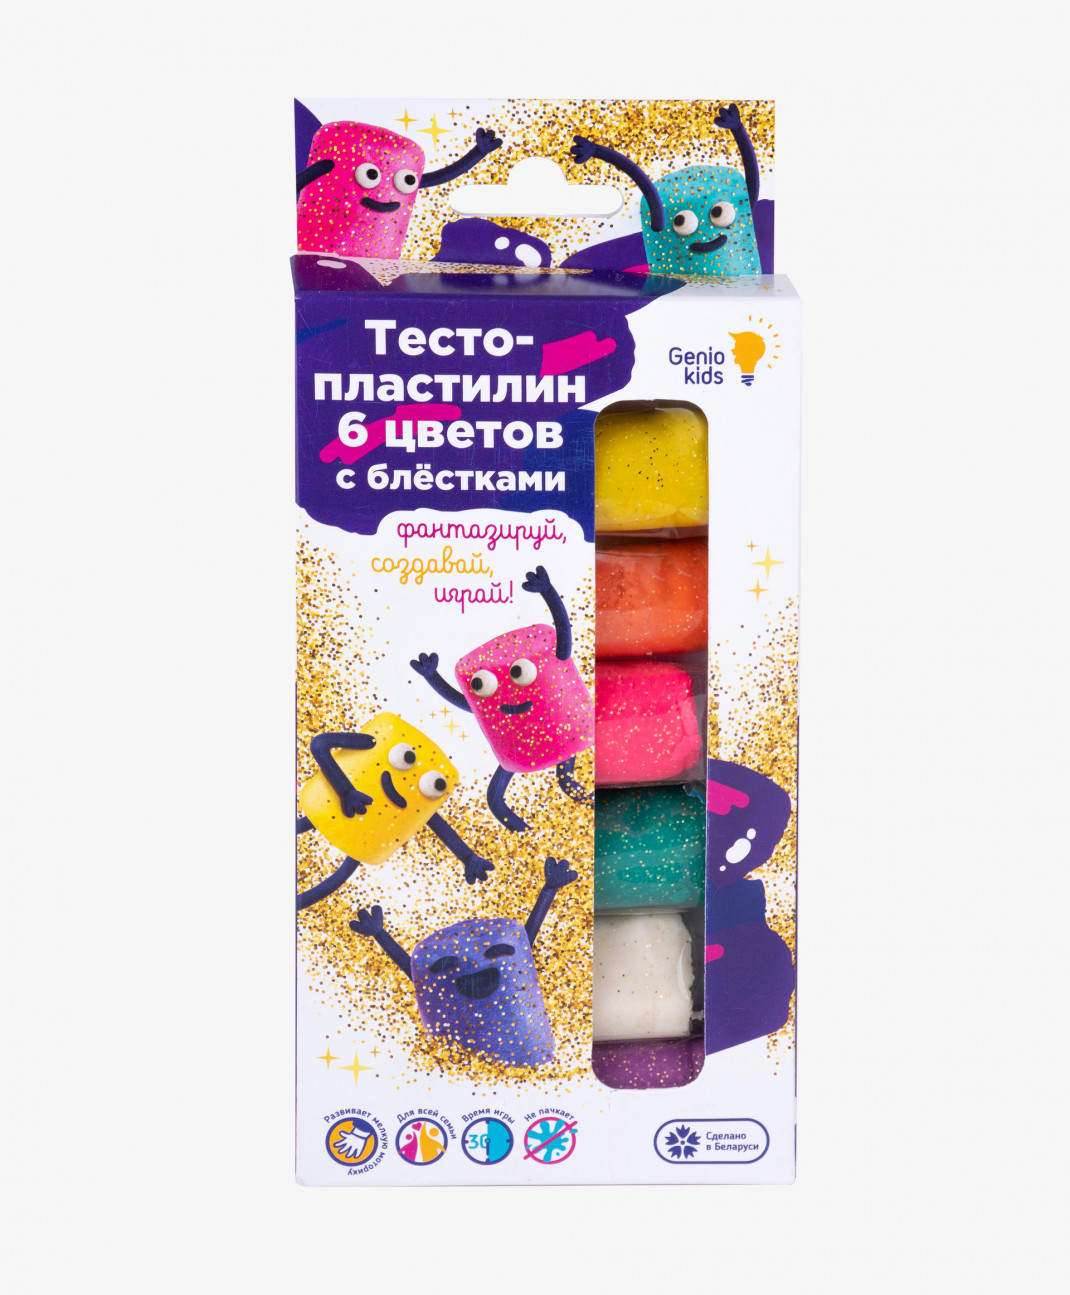 Genio Kids Набор для детской лепки Genio Kids Тесто-пластилин 6 цветов с блестками